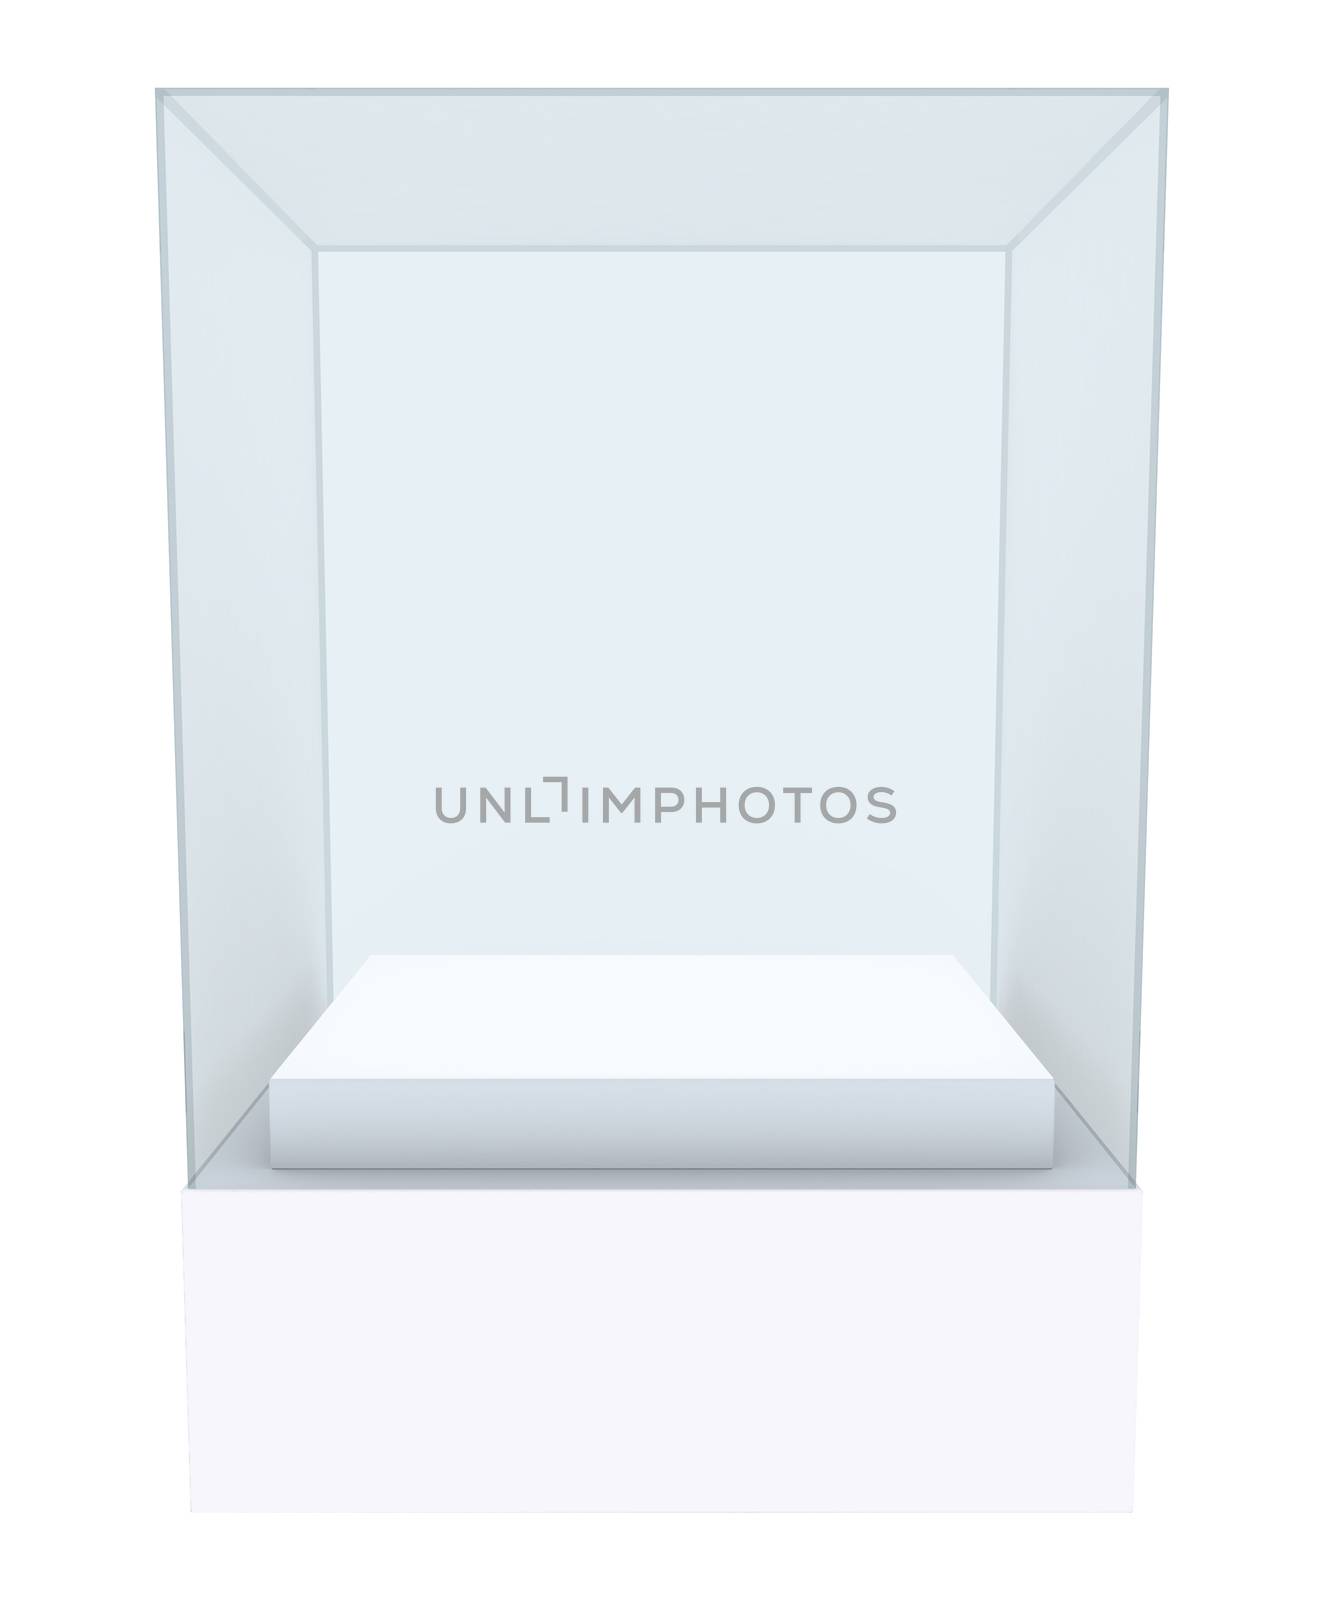 Glass showcase podium in center. White background. 3D illustration